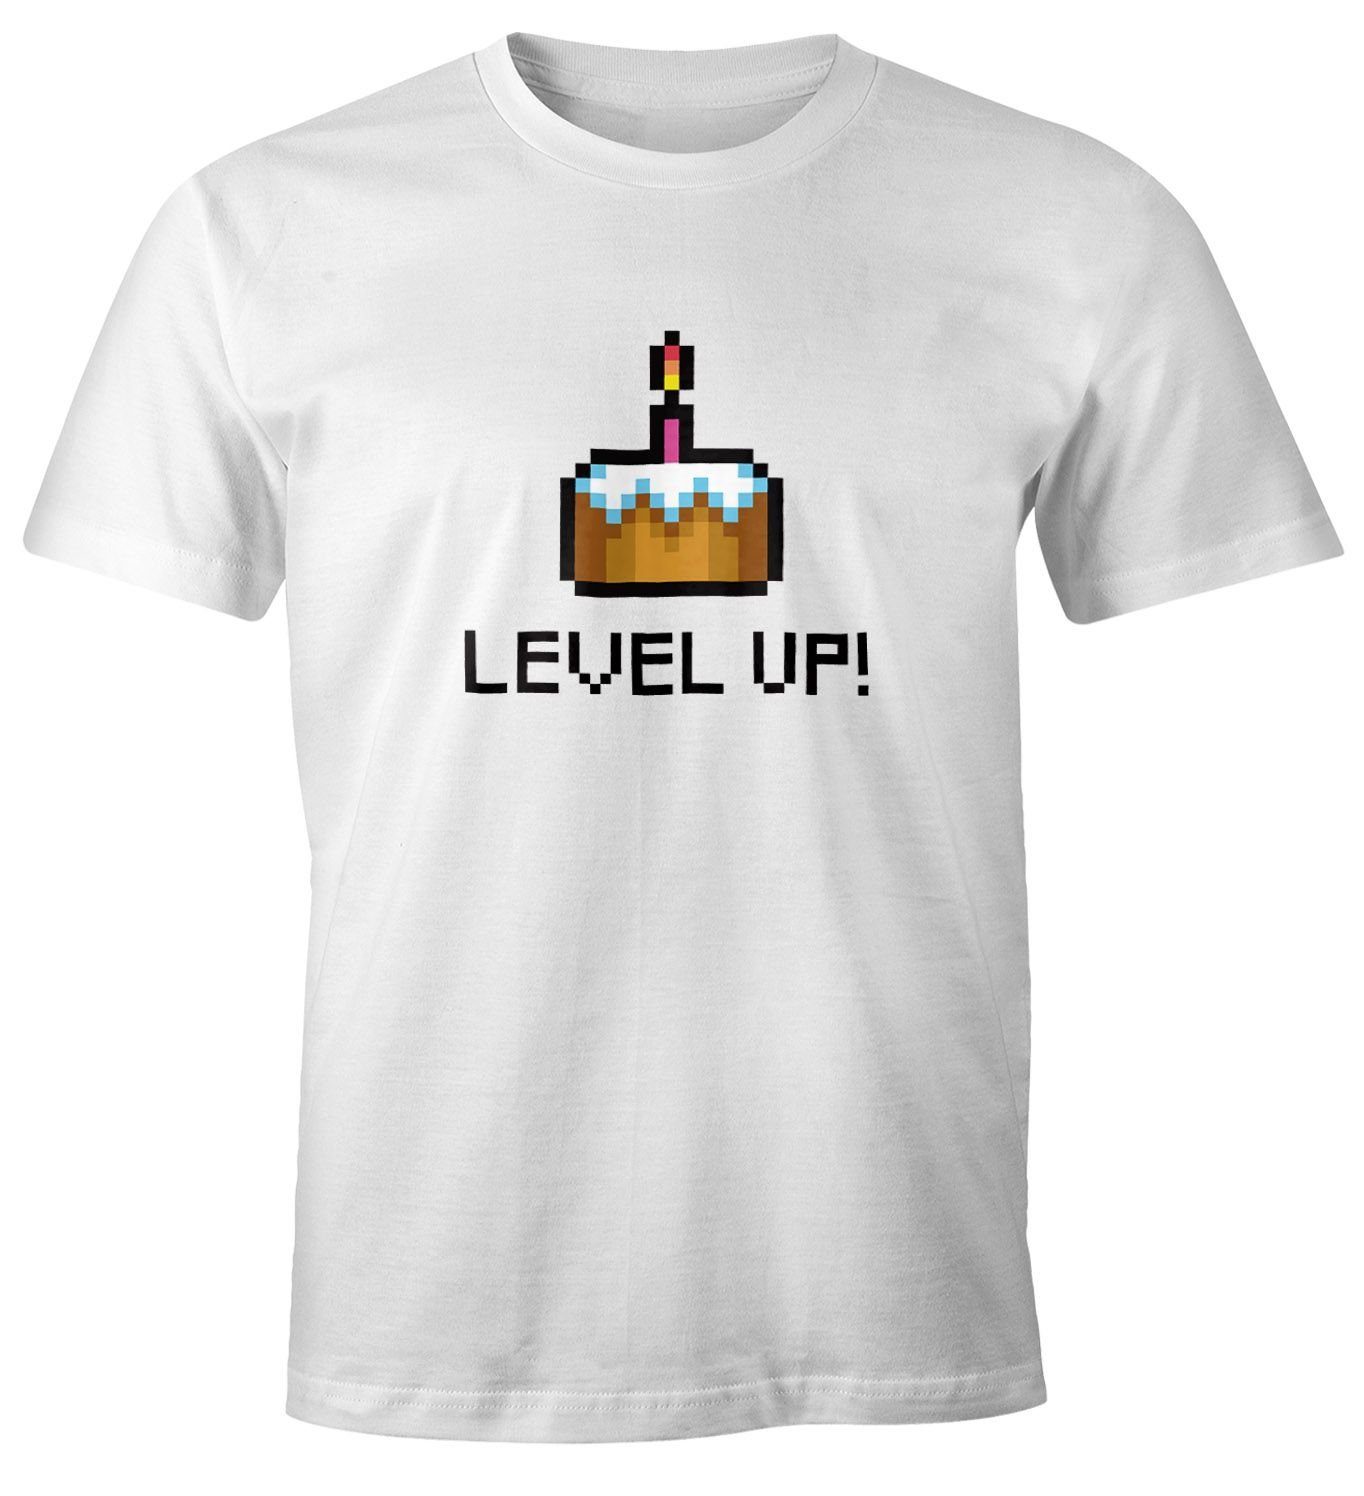 T-Shirt Up Print-Shirt mit Retro Print Fun-Shirt Geschenk weiß Pixelgrafik Herren MoonWorks Moonworks® Geburtstag Arcade Level Pixel-Torte Gamer